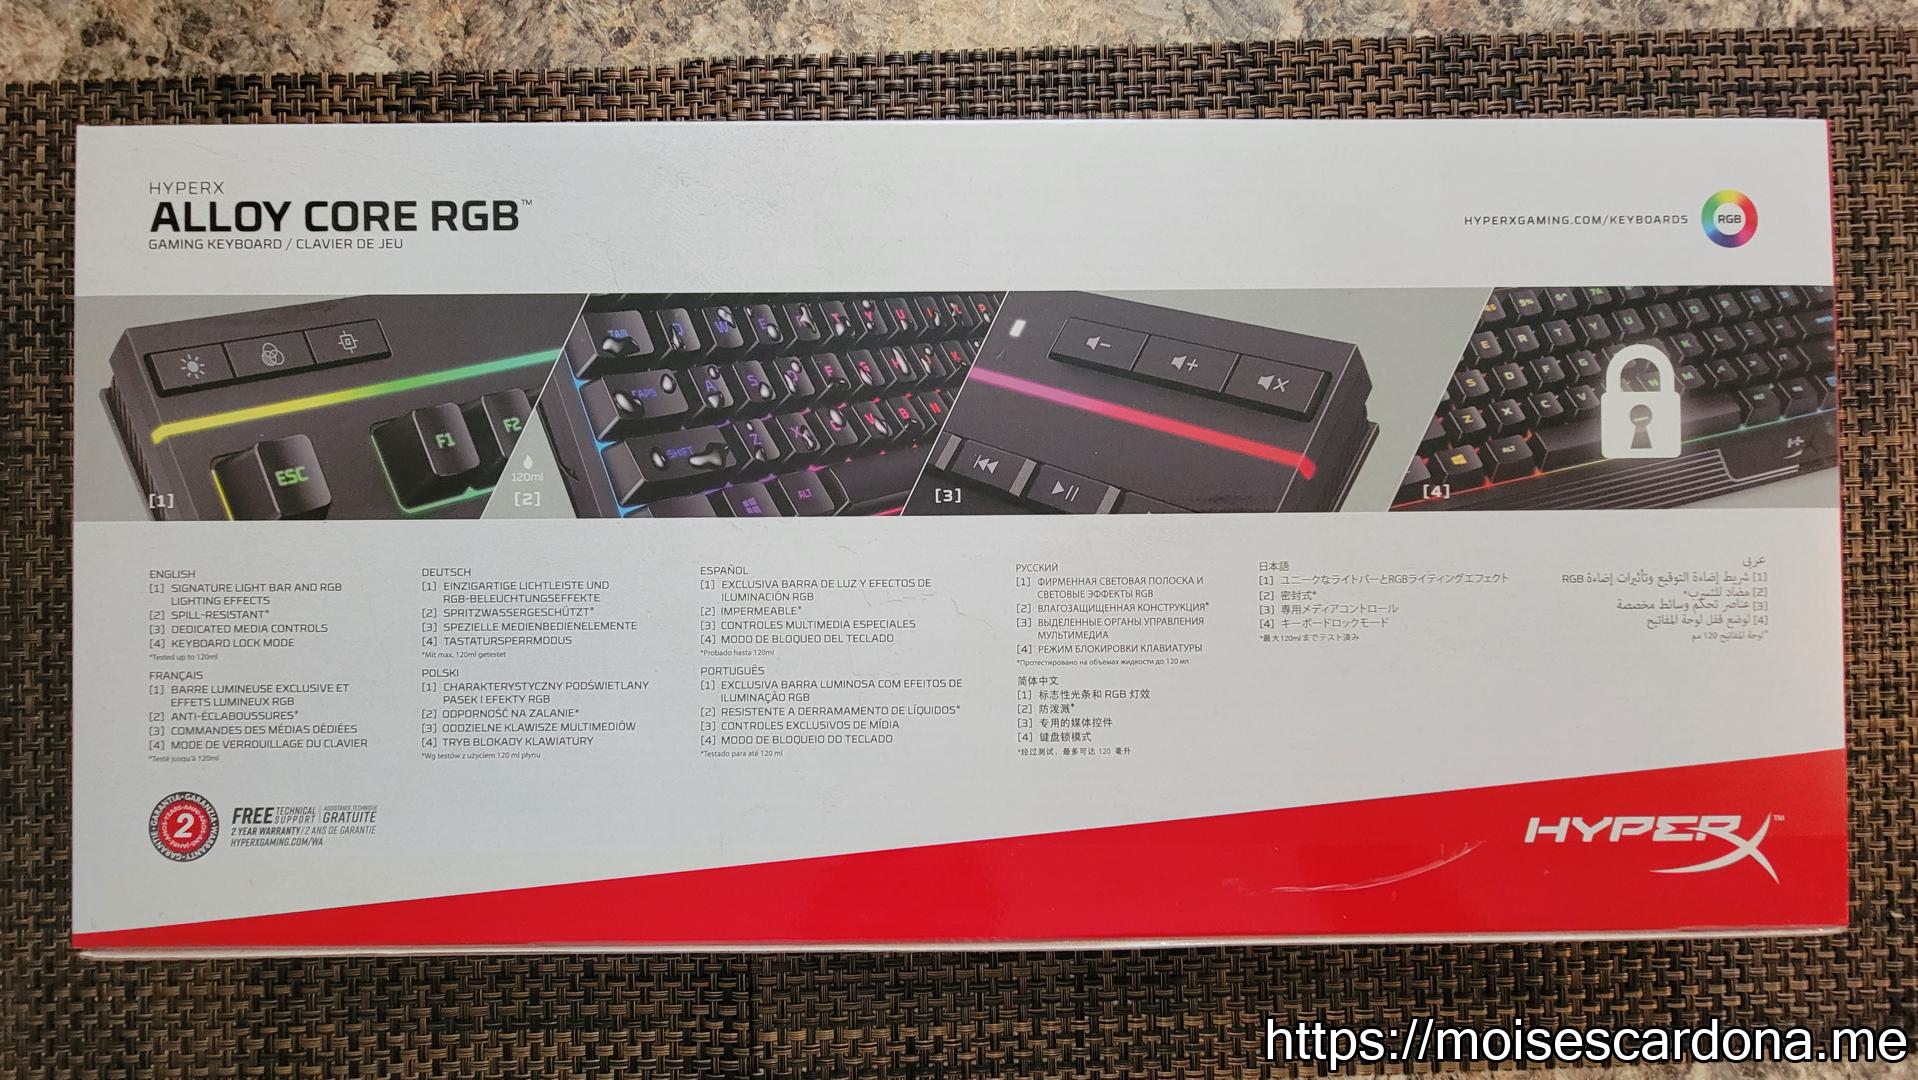 2 - HyperX Alloy Core RGB Keyboard - Box Back